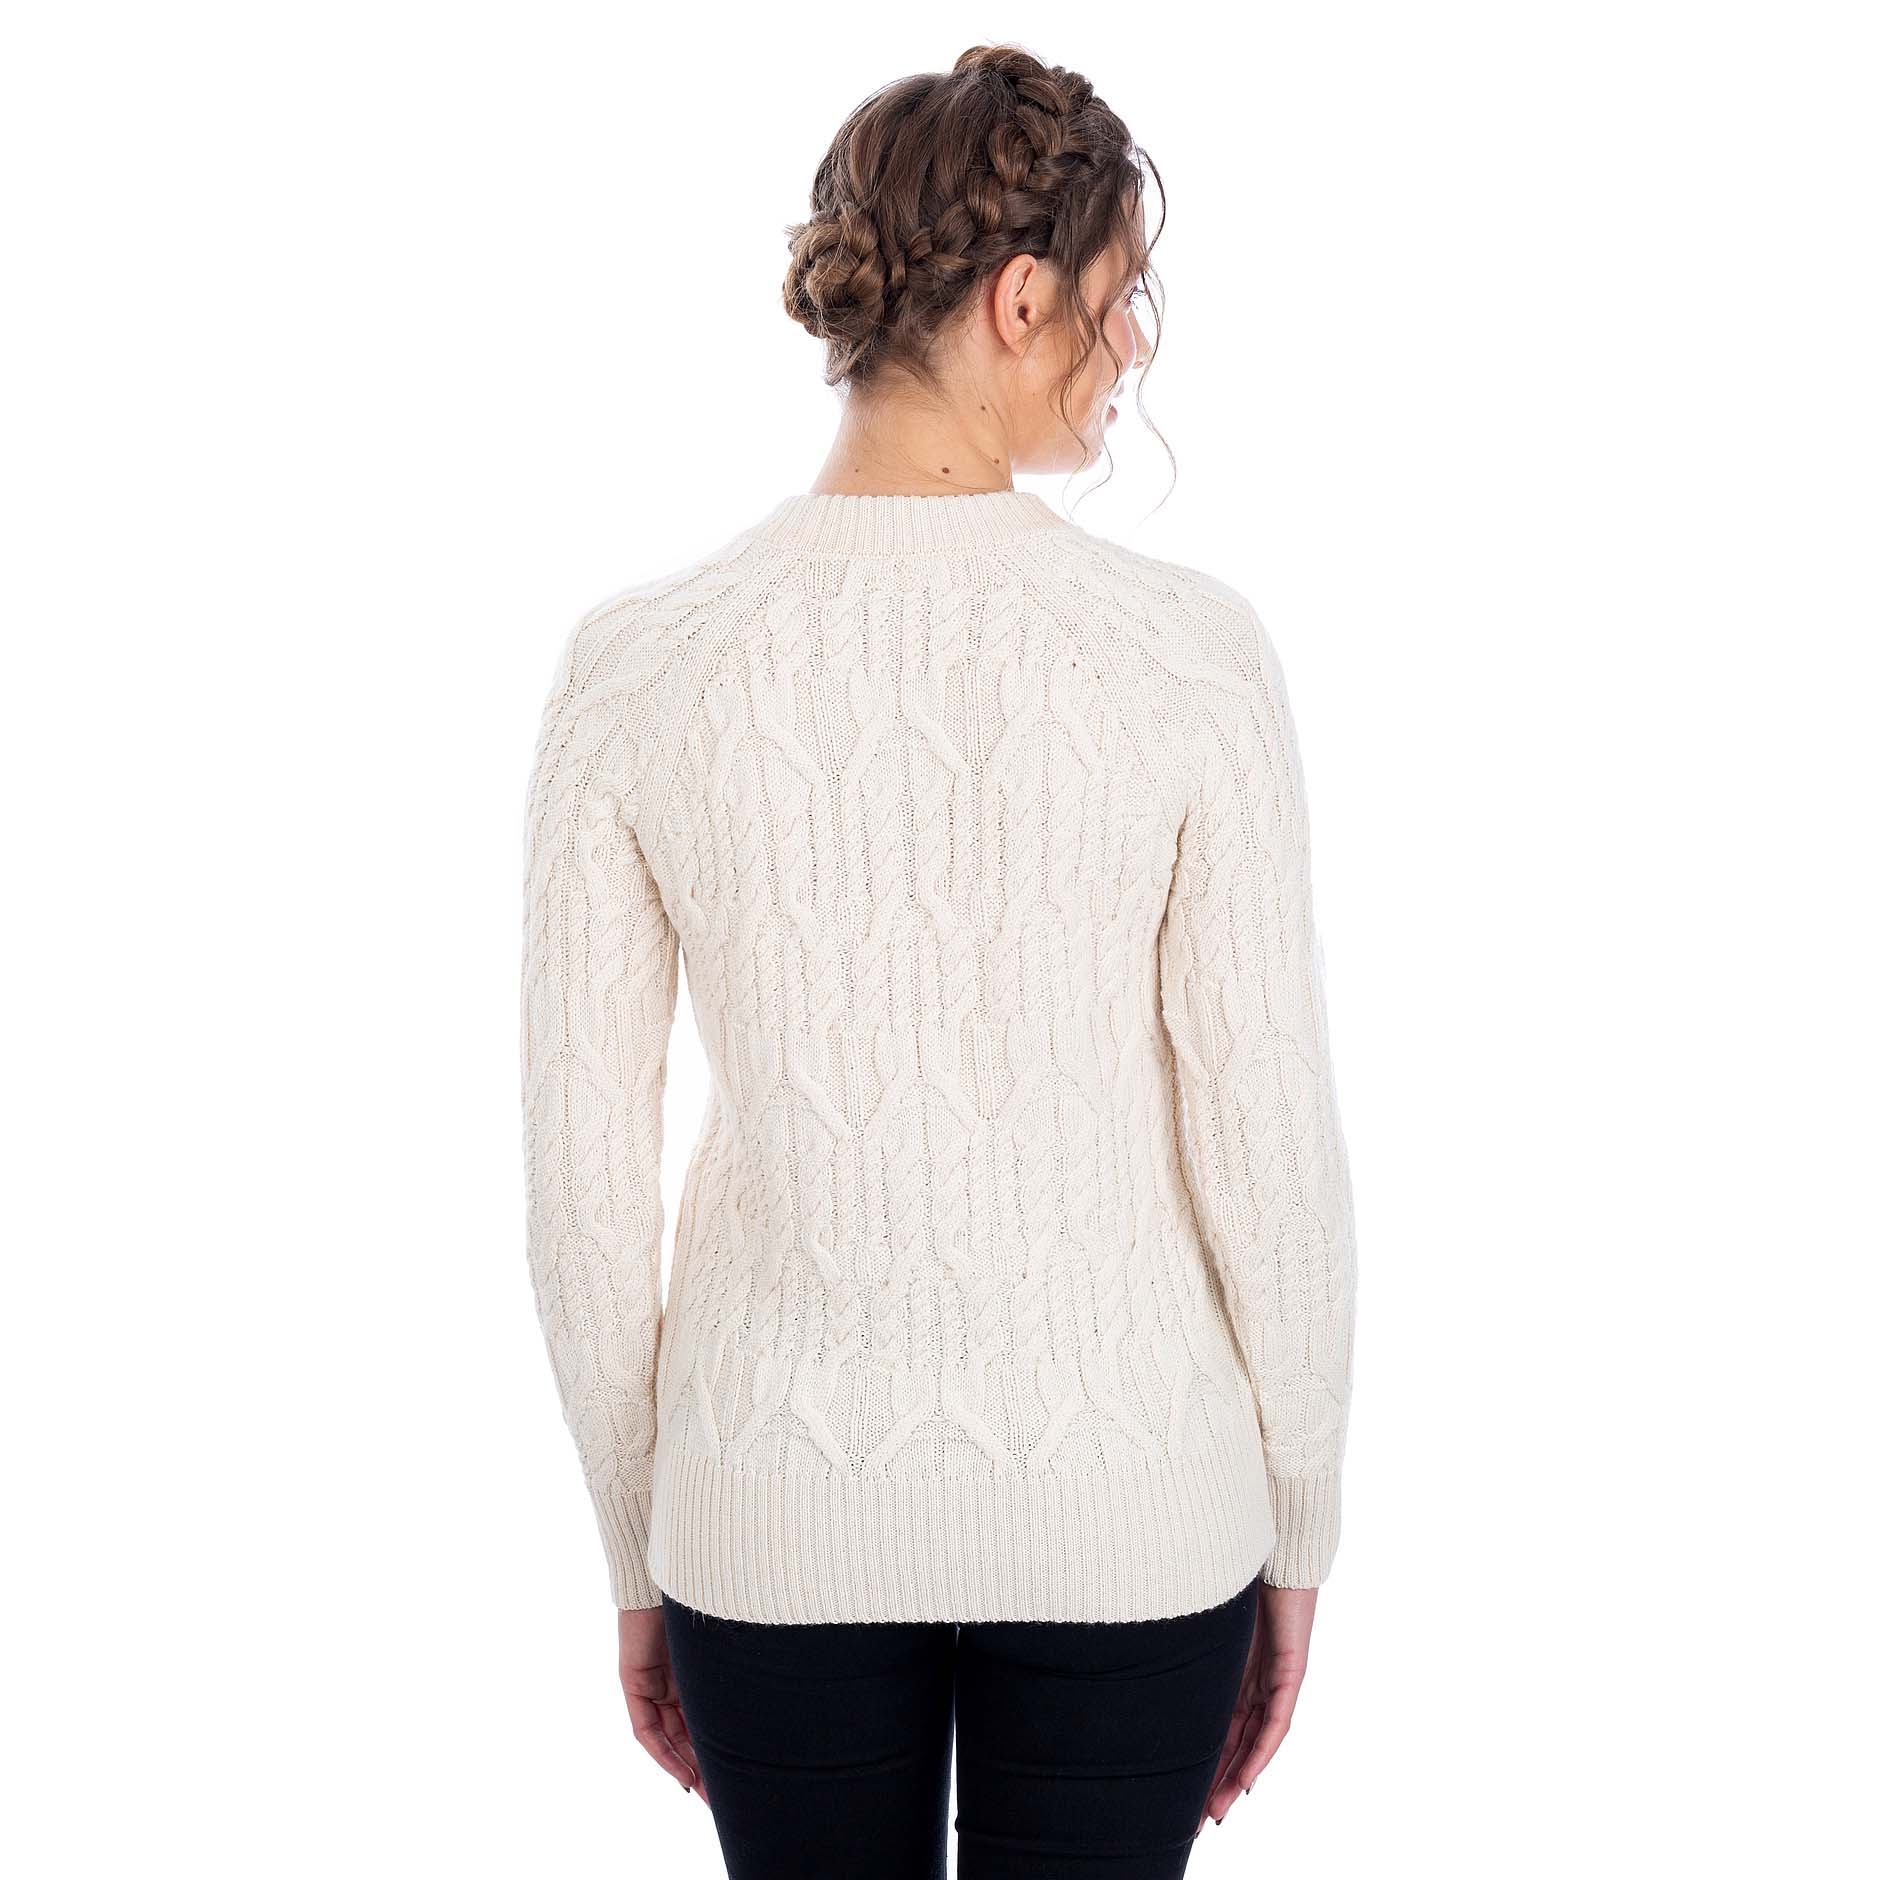 Product image for Irish Sweater | Crew Neck Aran Knit Ladies Sweater